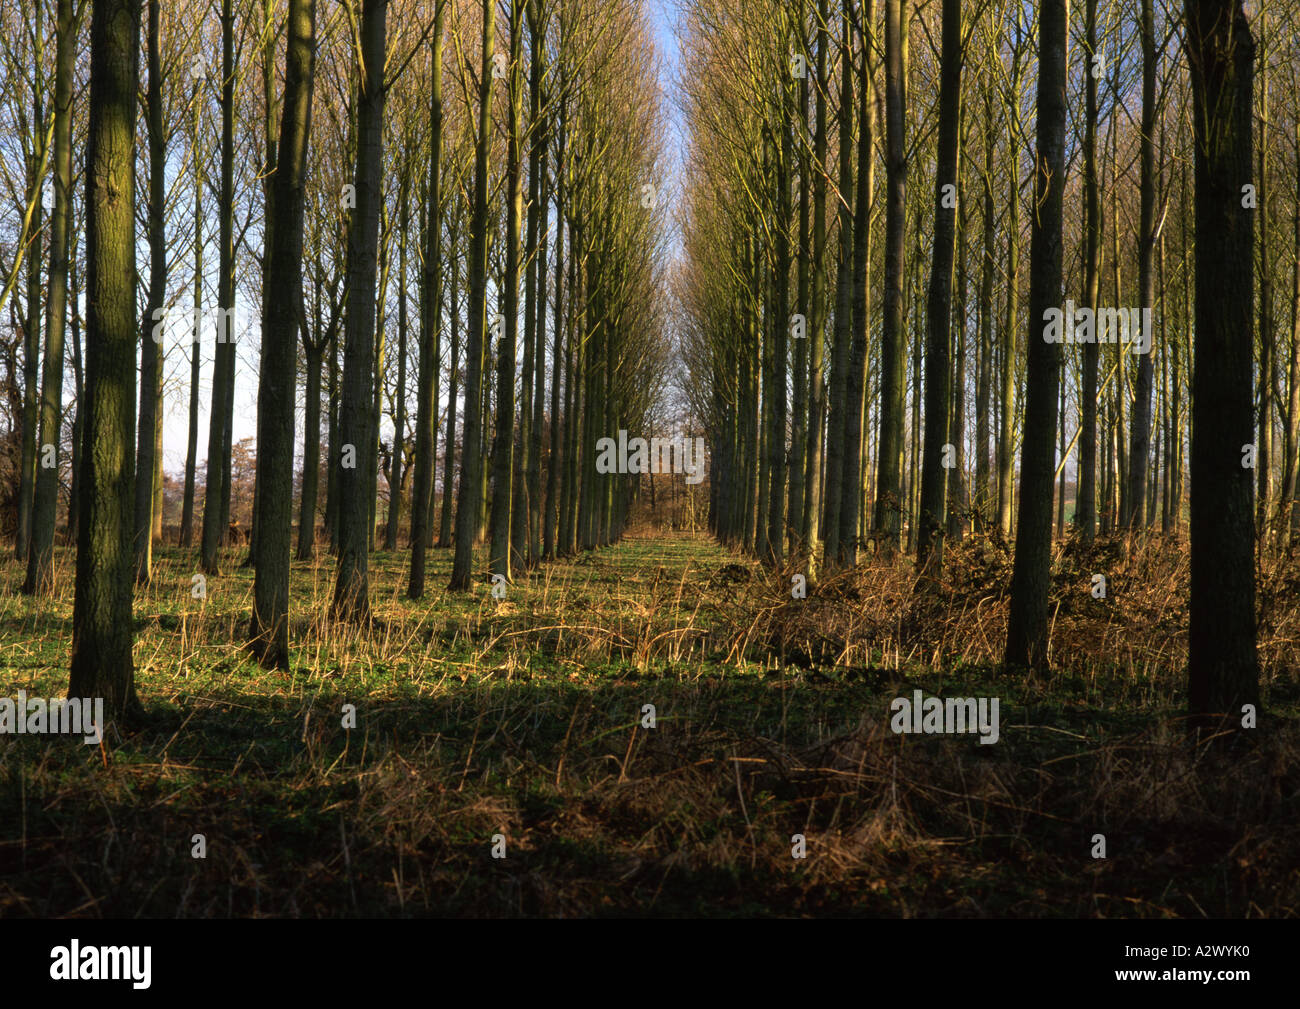 Poplar trees in Henham in Suffolk in the Uk (Medium Format) Stock Photo